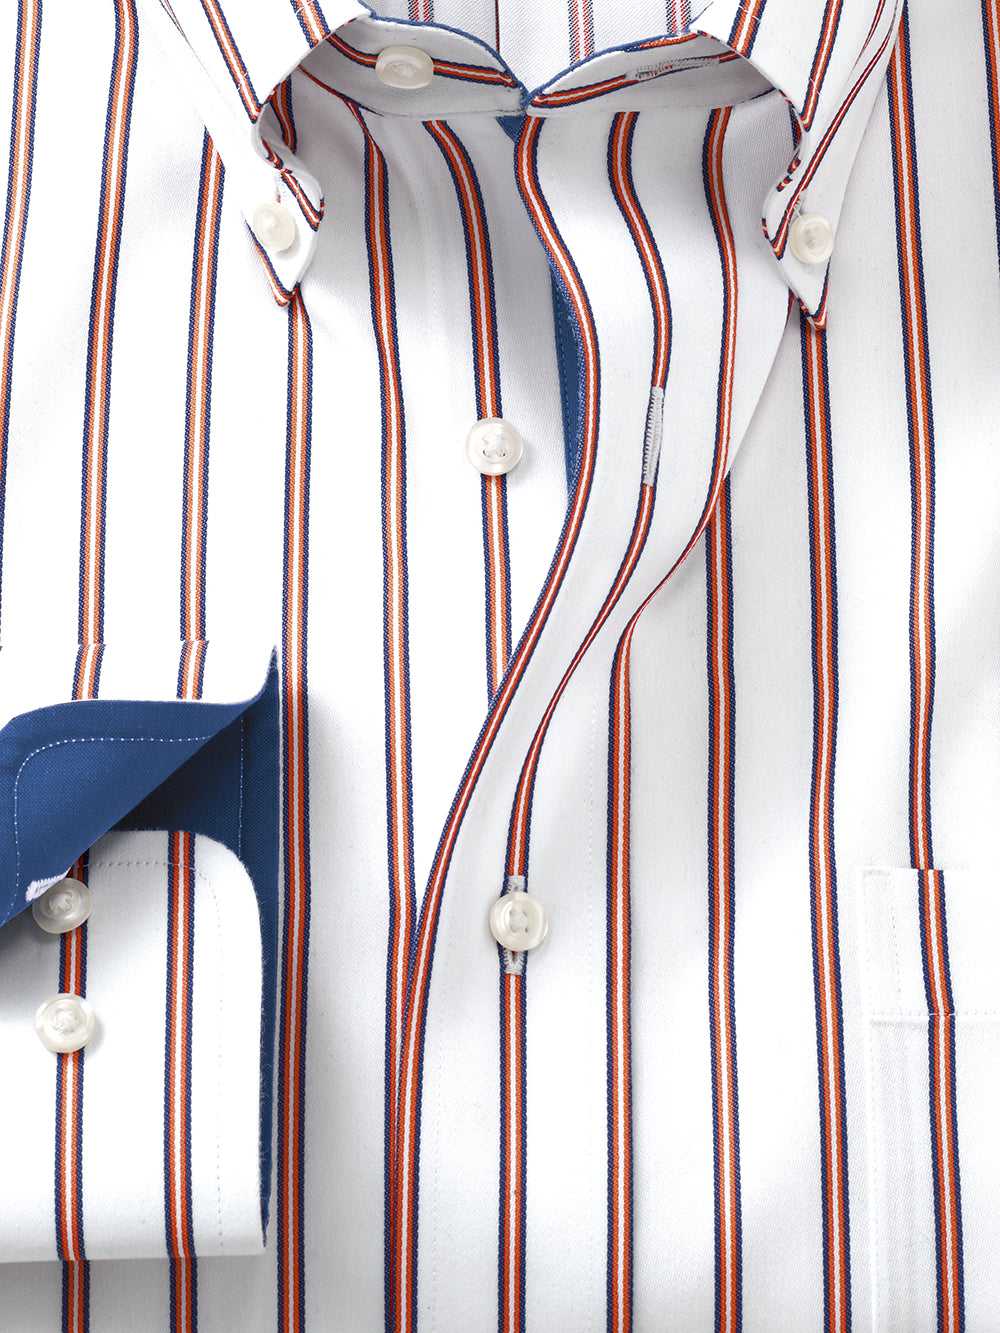 Paul Fredrick, Slim Fit Non-iron Cotton Stripe Dress Shirt With Contrast Trim